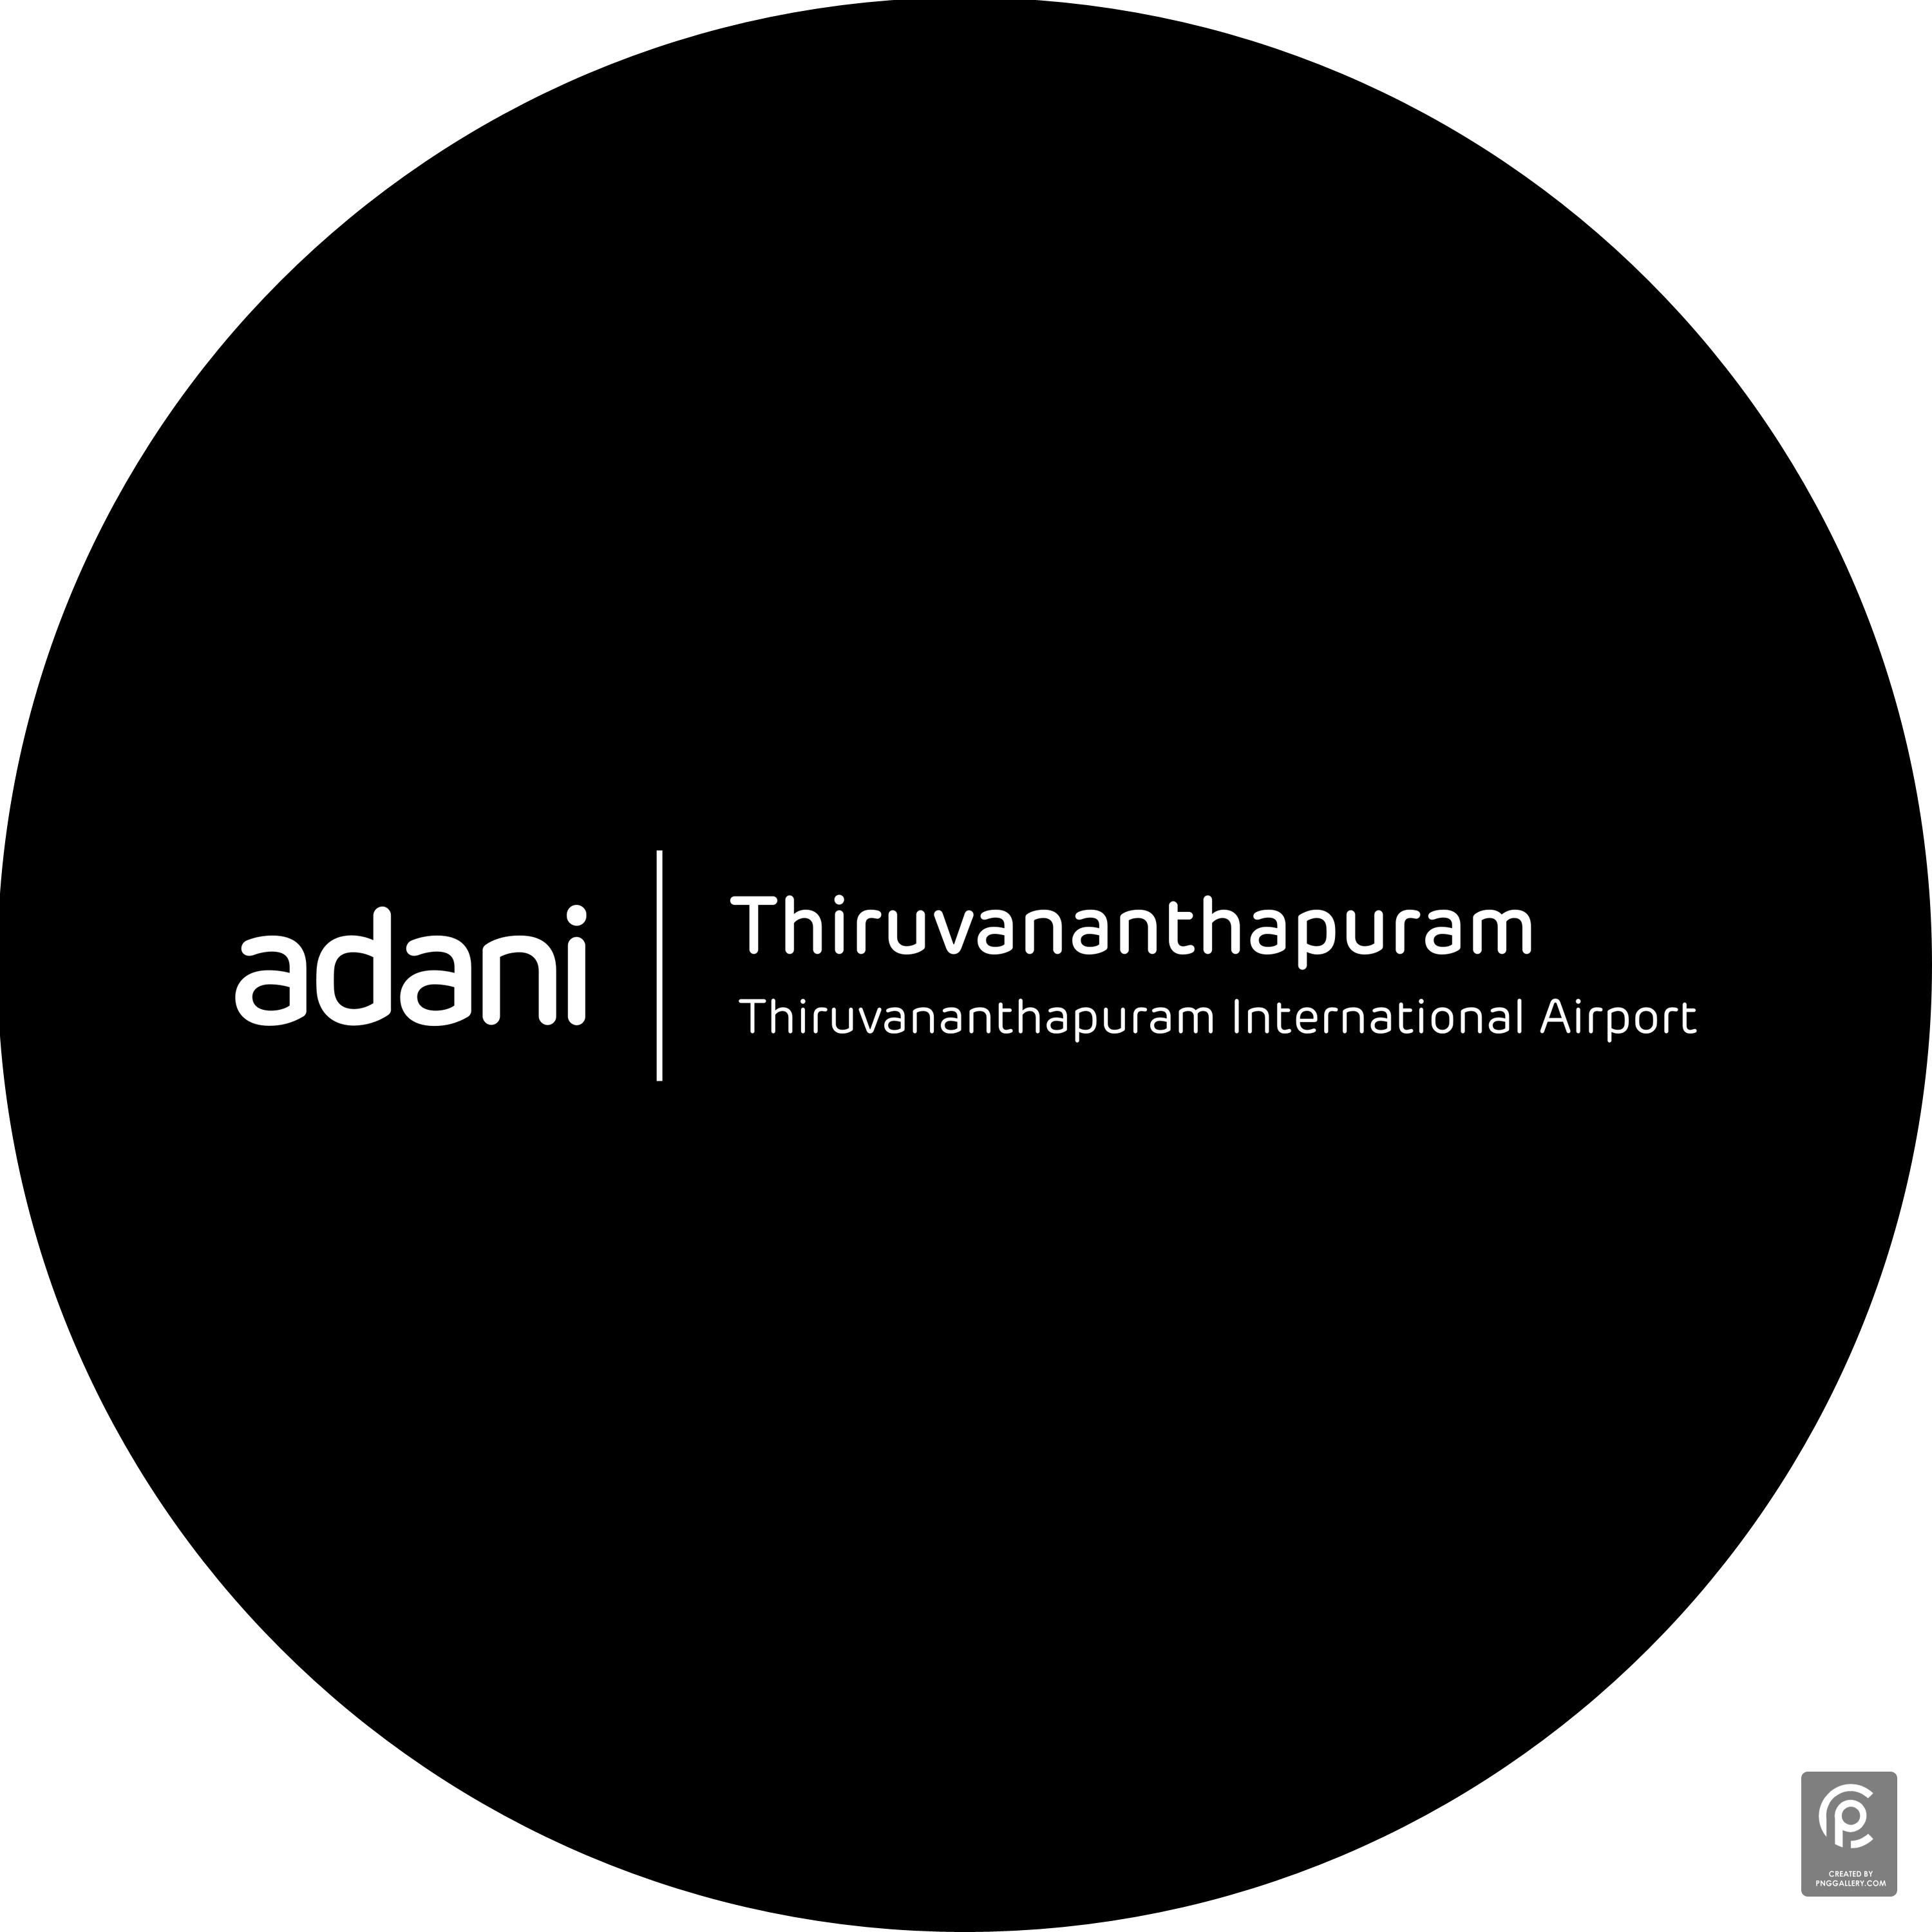 Thiruvananthapuram Airport Logo Transparent Gallery